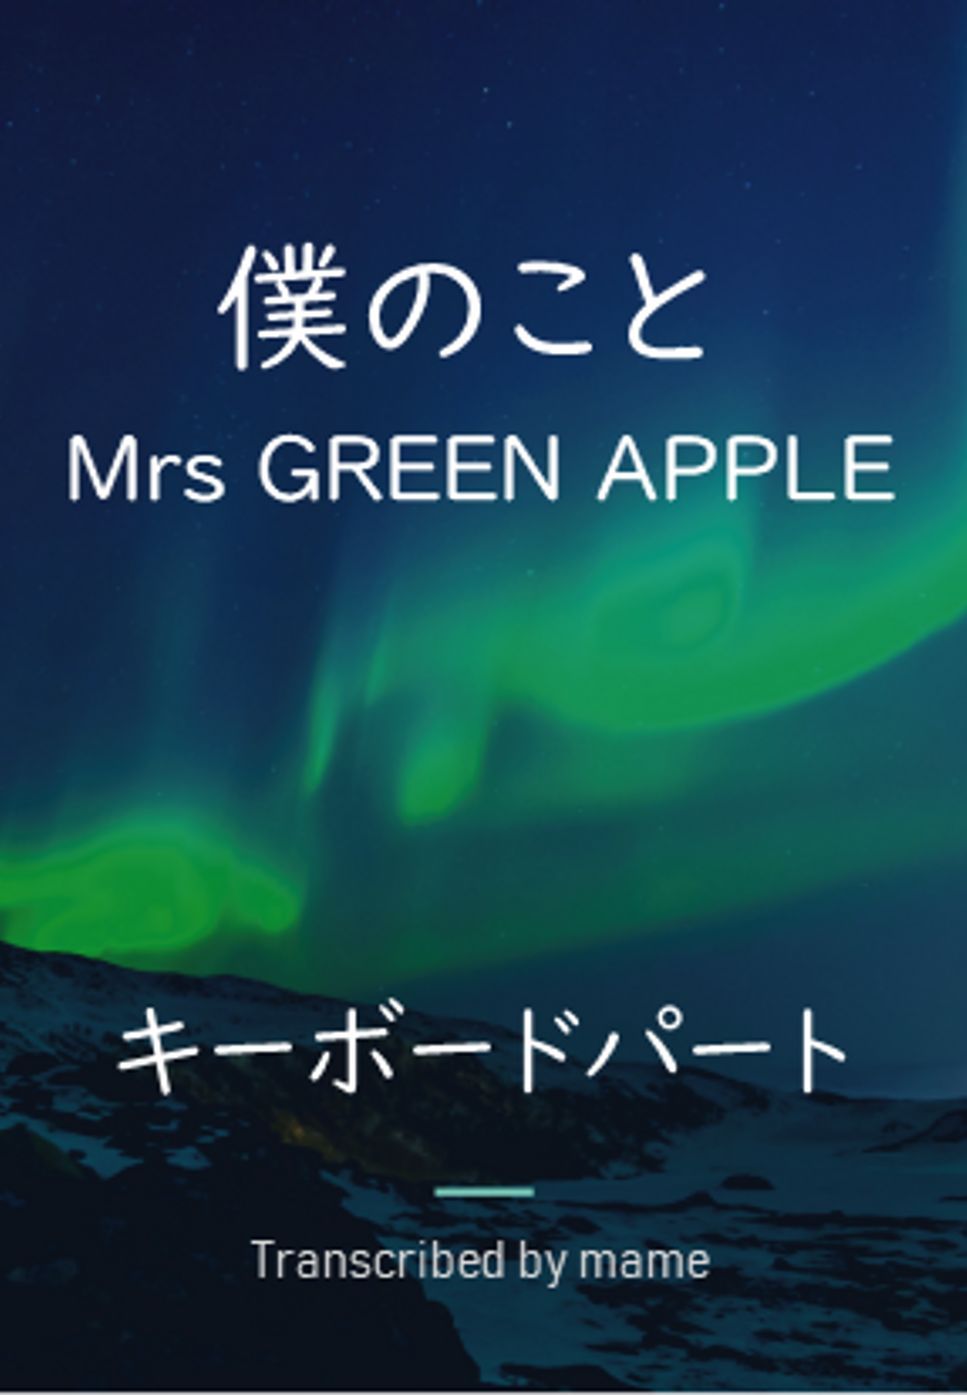 Mrs GREEN APPLE - 僕のこと(Bokuno Koto) (piano part) by mame